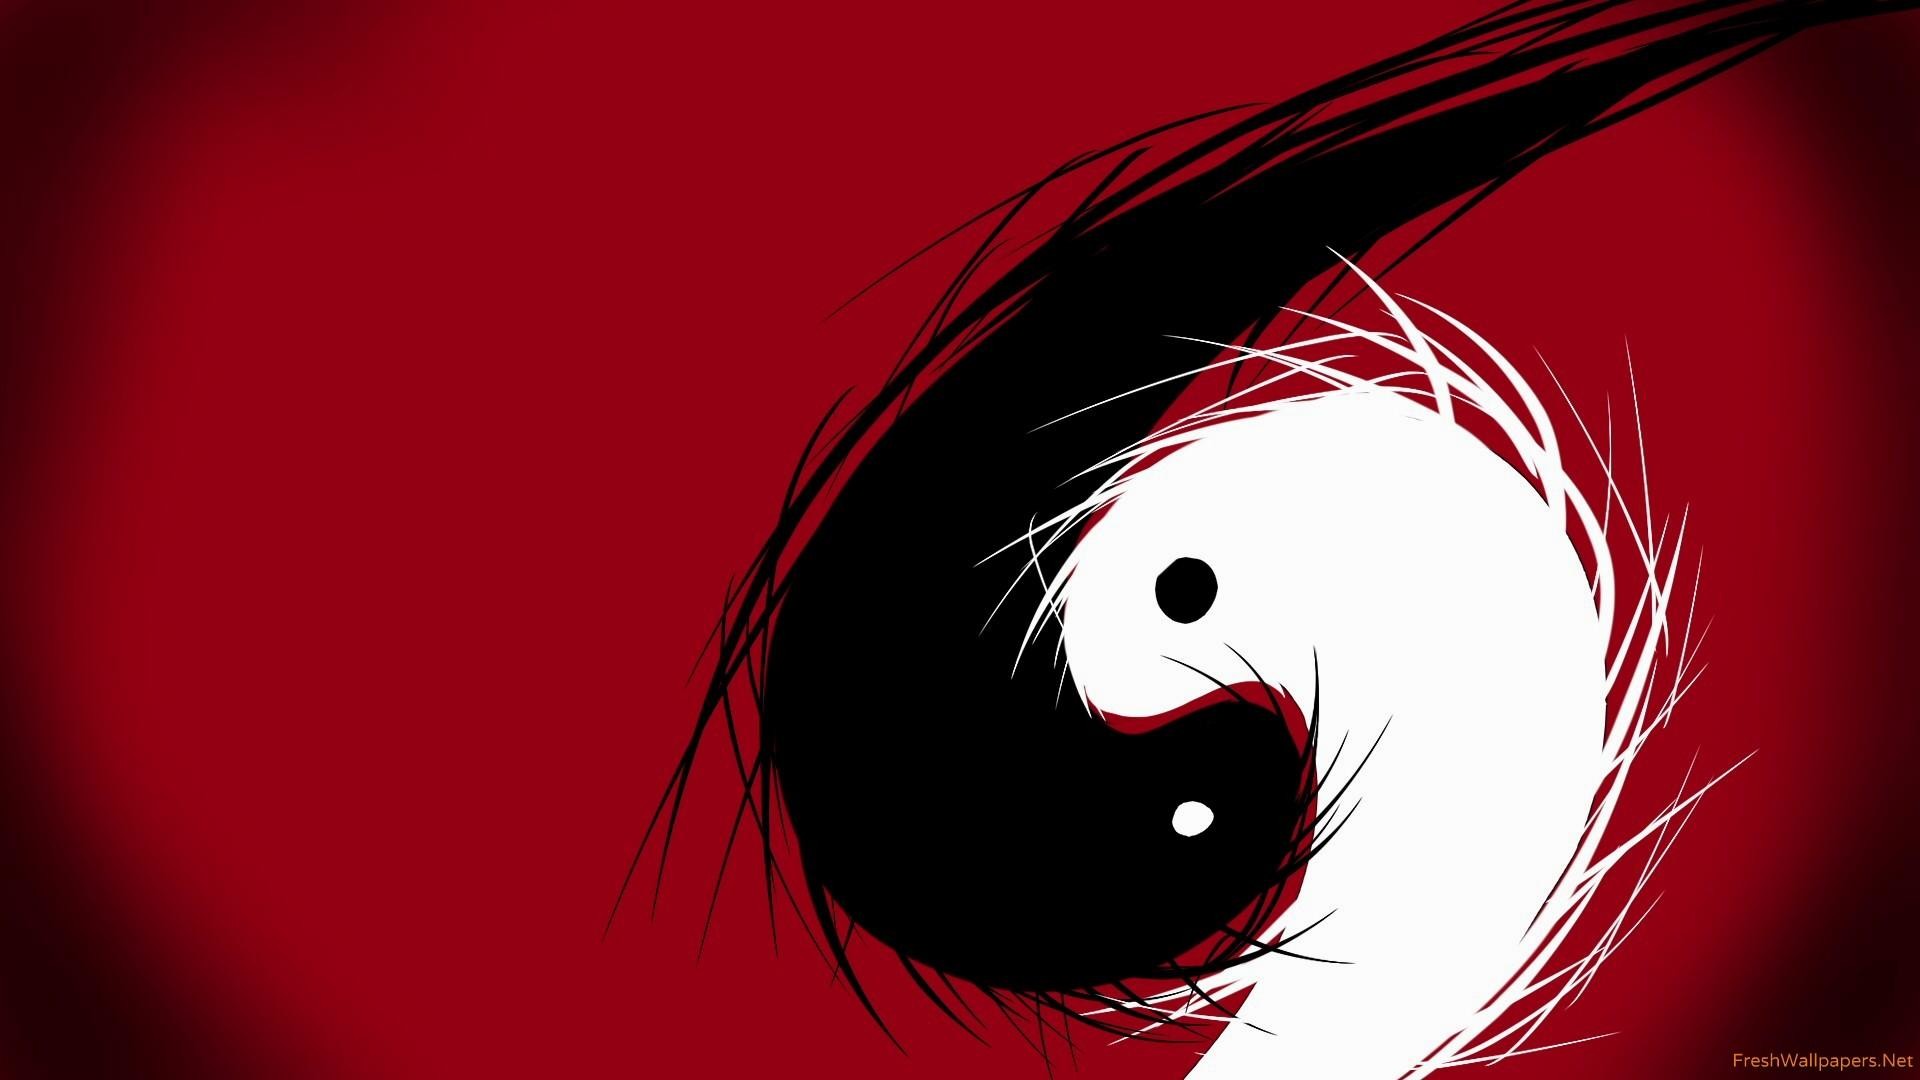 wallpaper ying yang,red,face,black,facial expression,eye